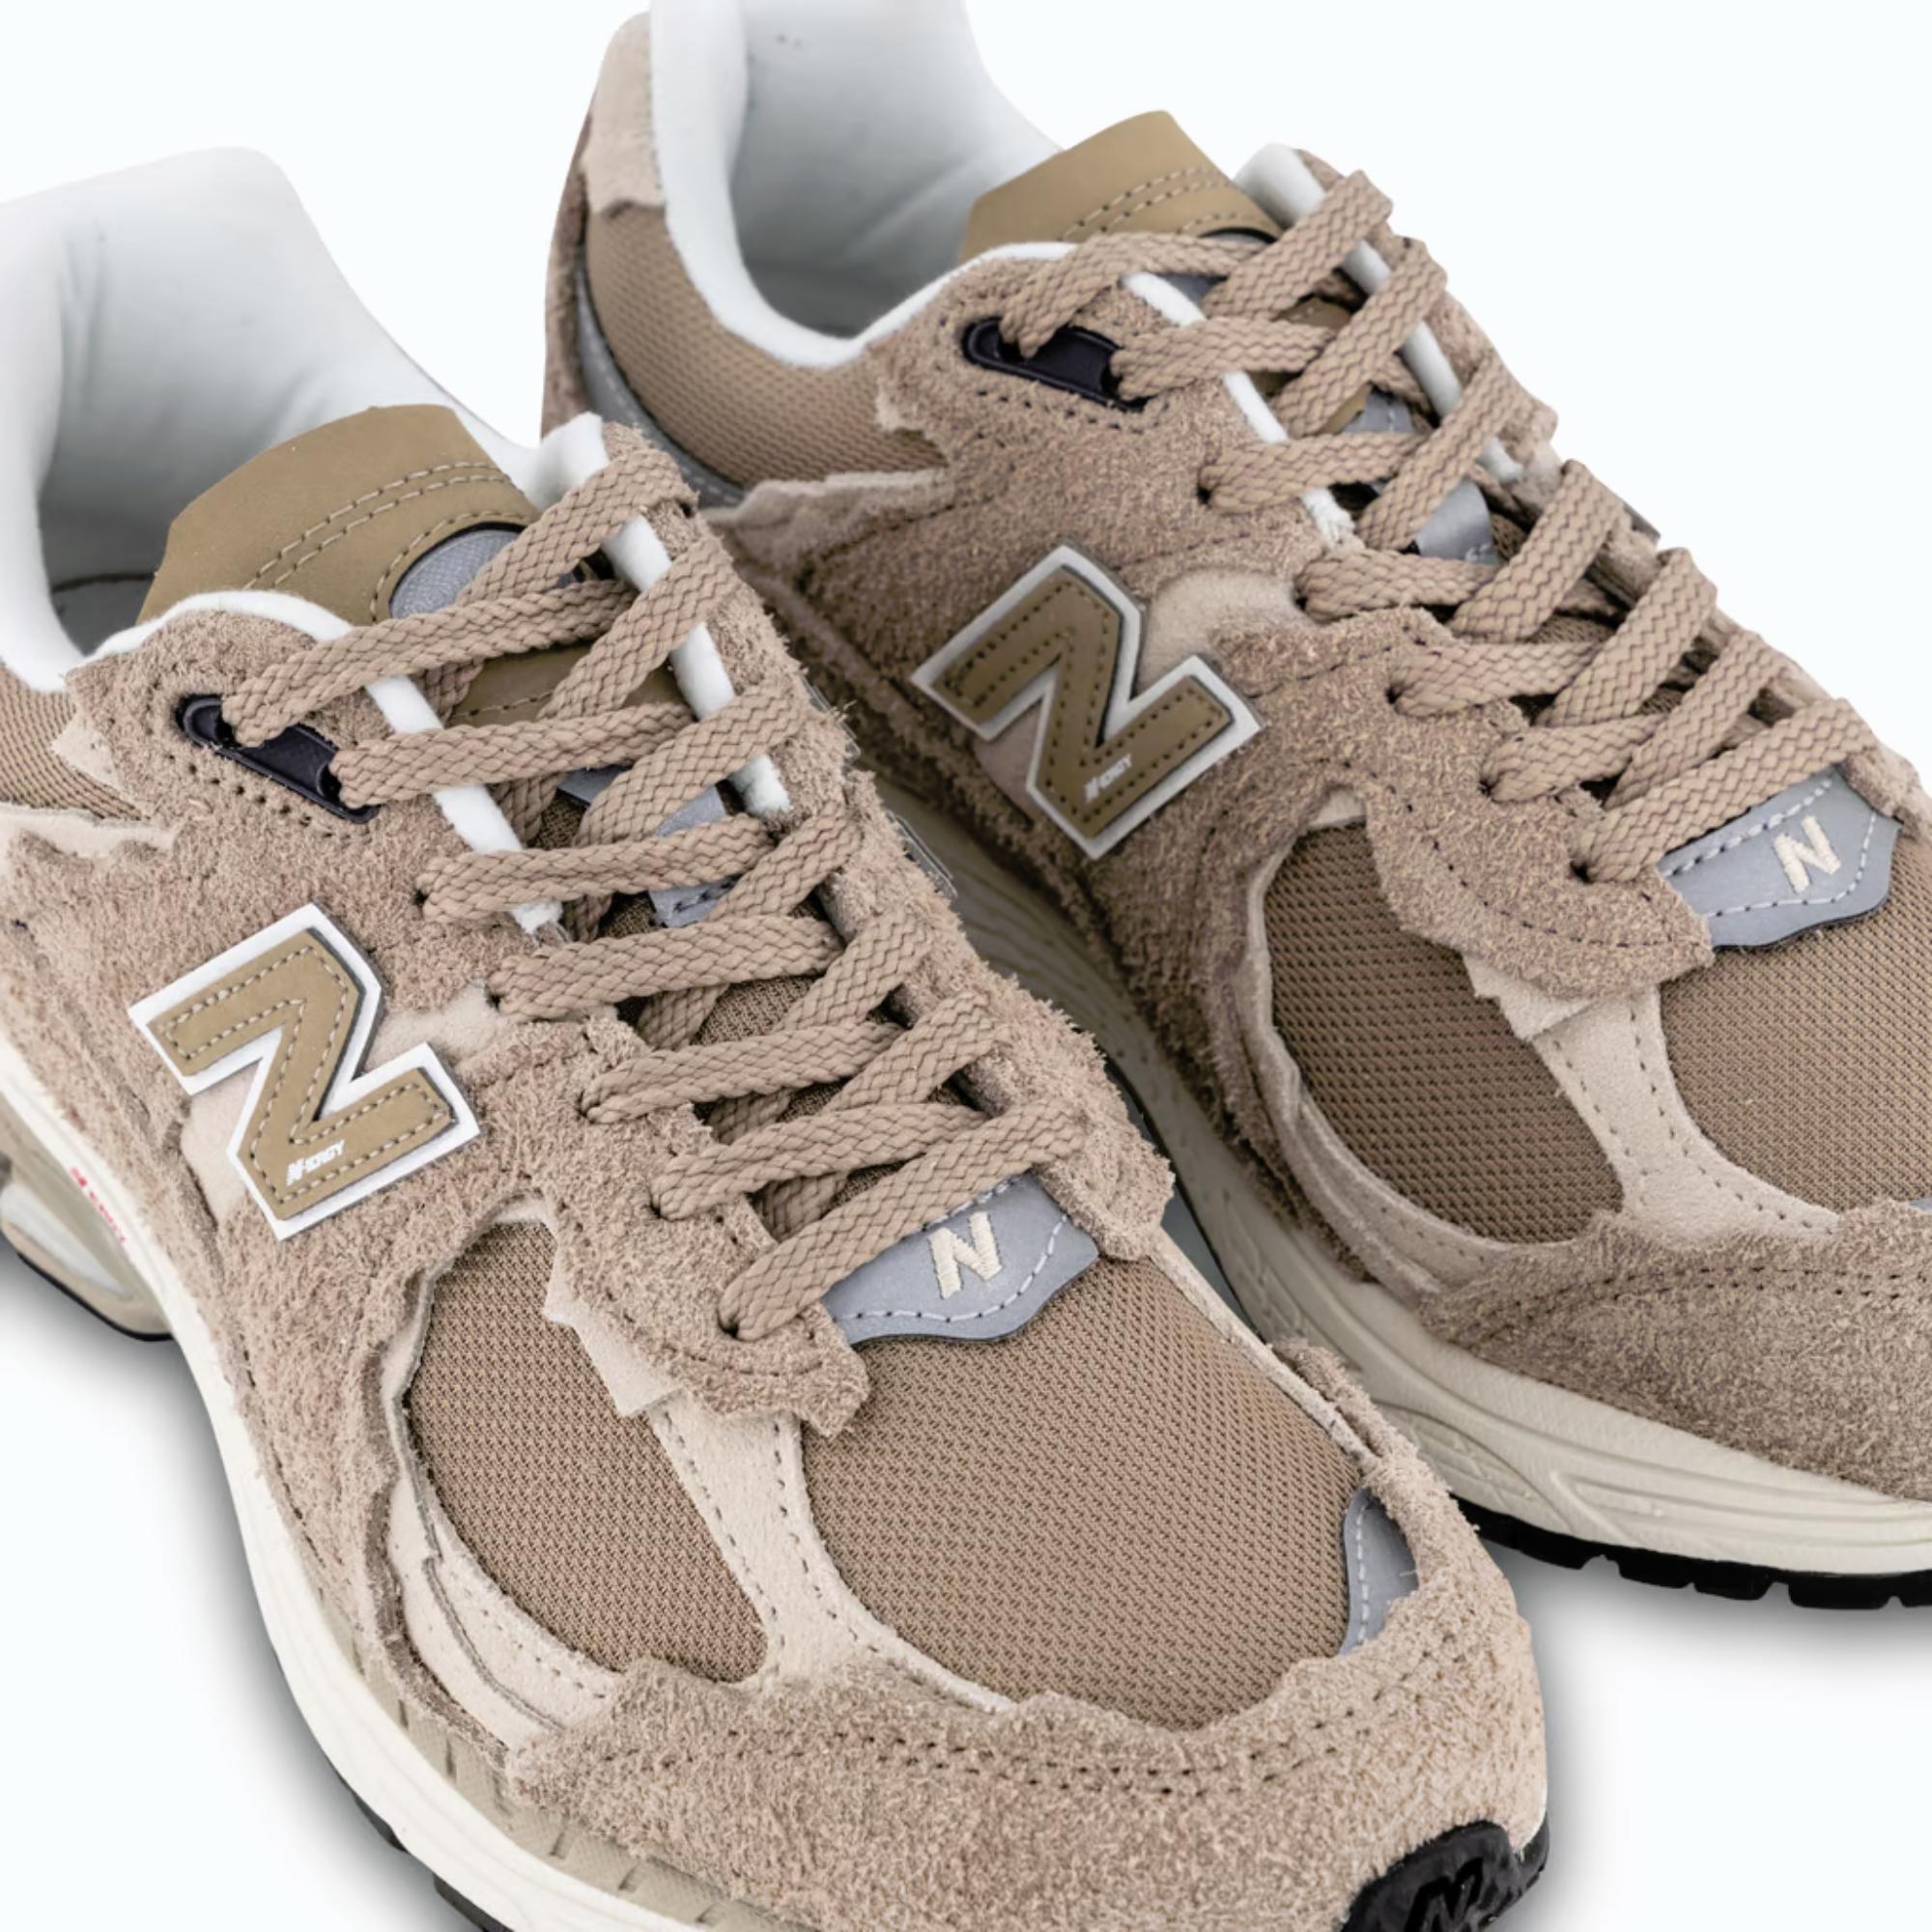 New Balance 2002Rdl ’Desert Sand’ Sneakers